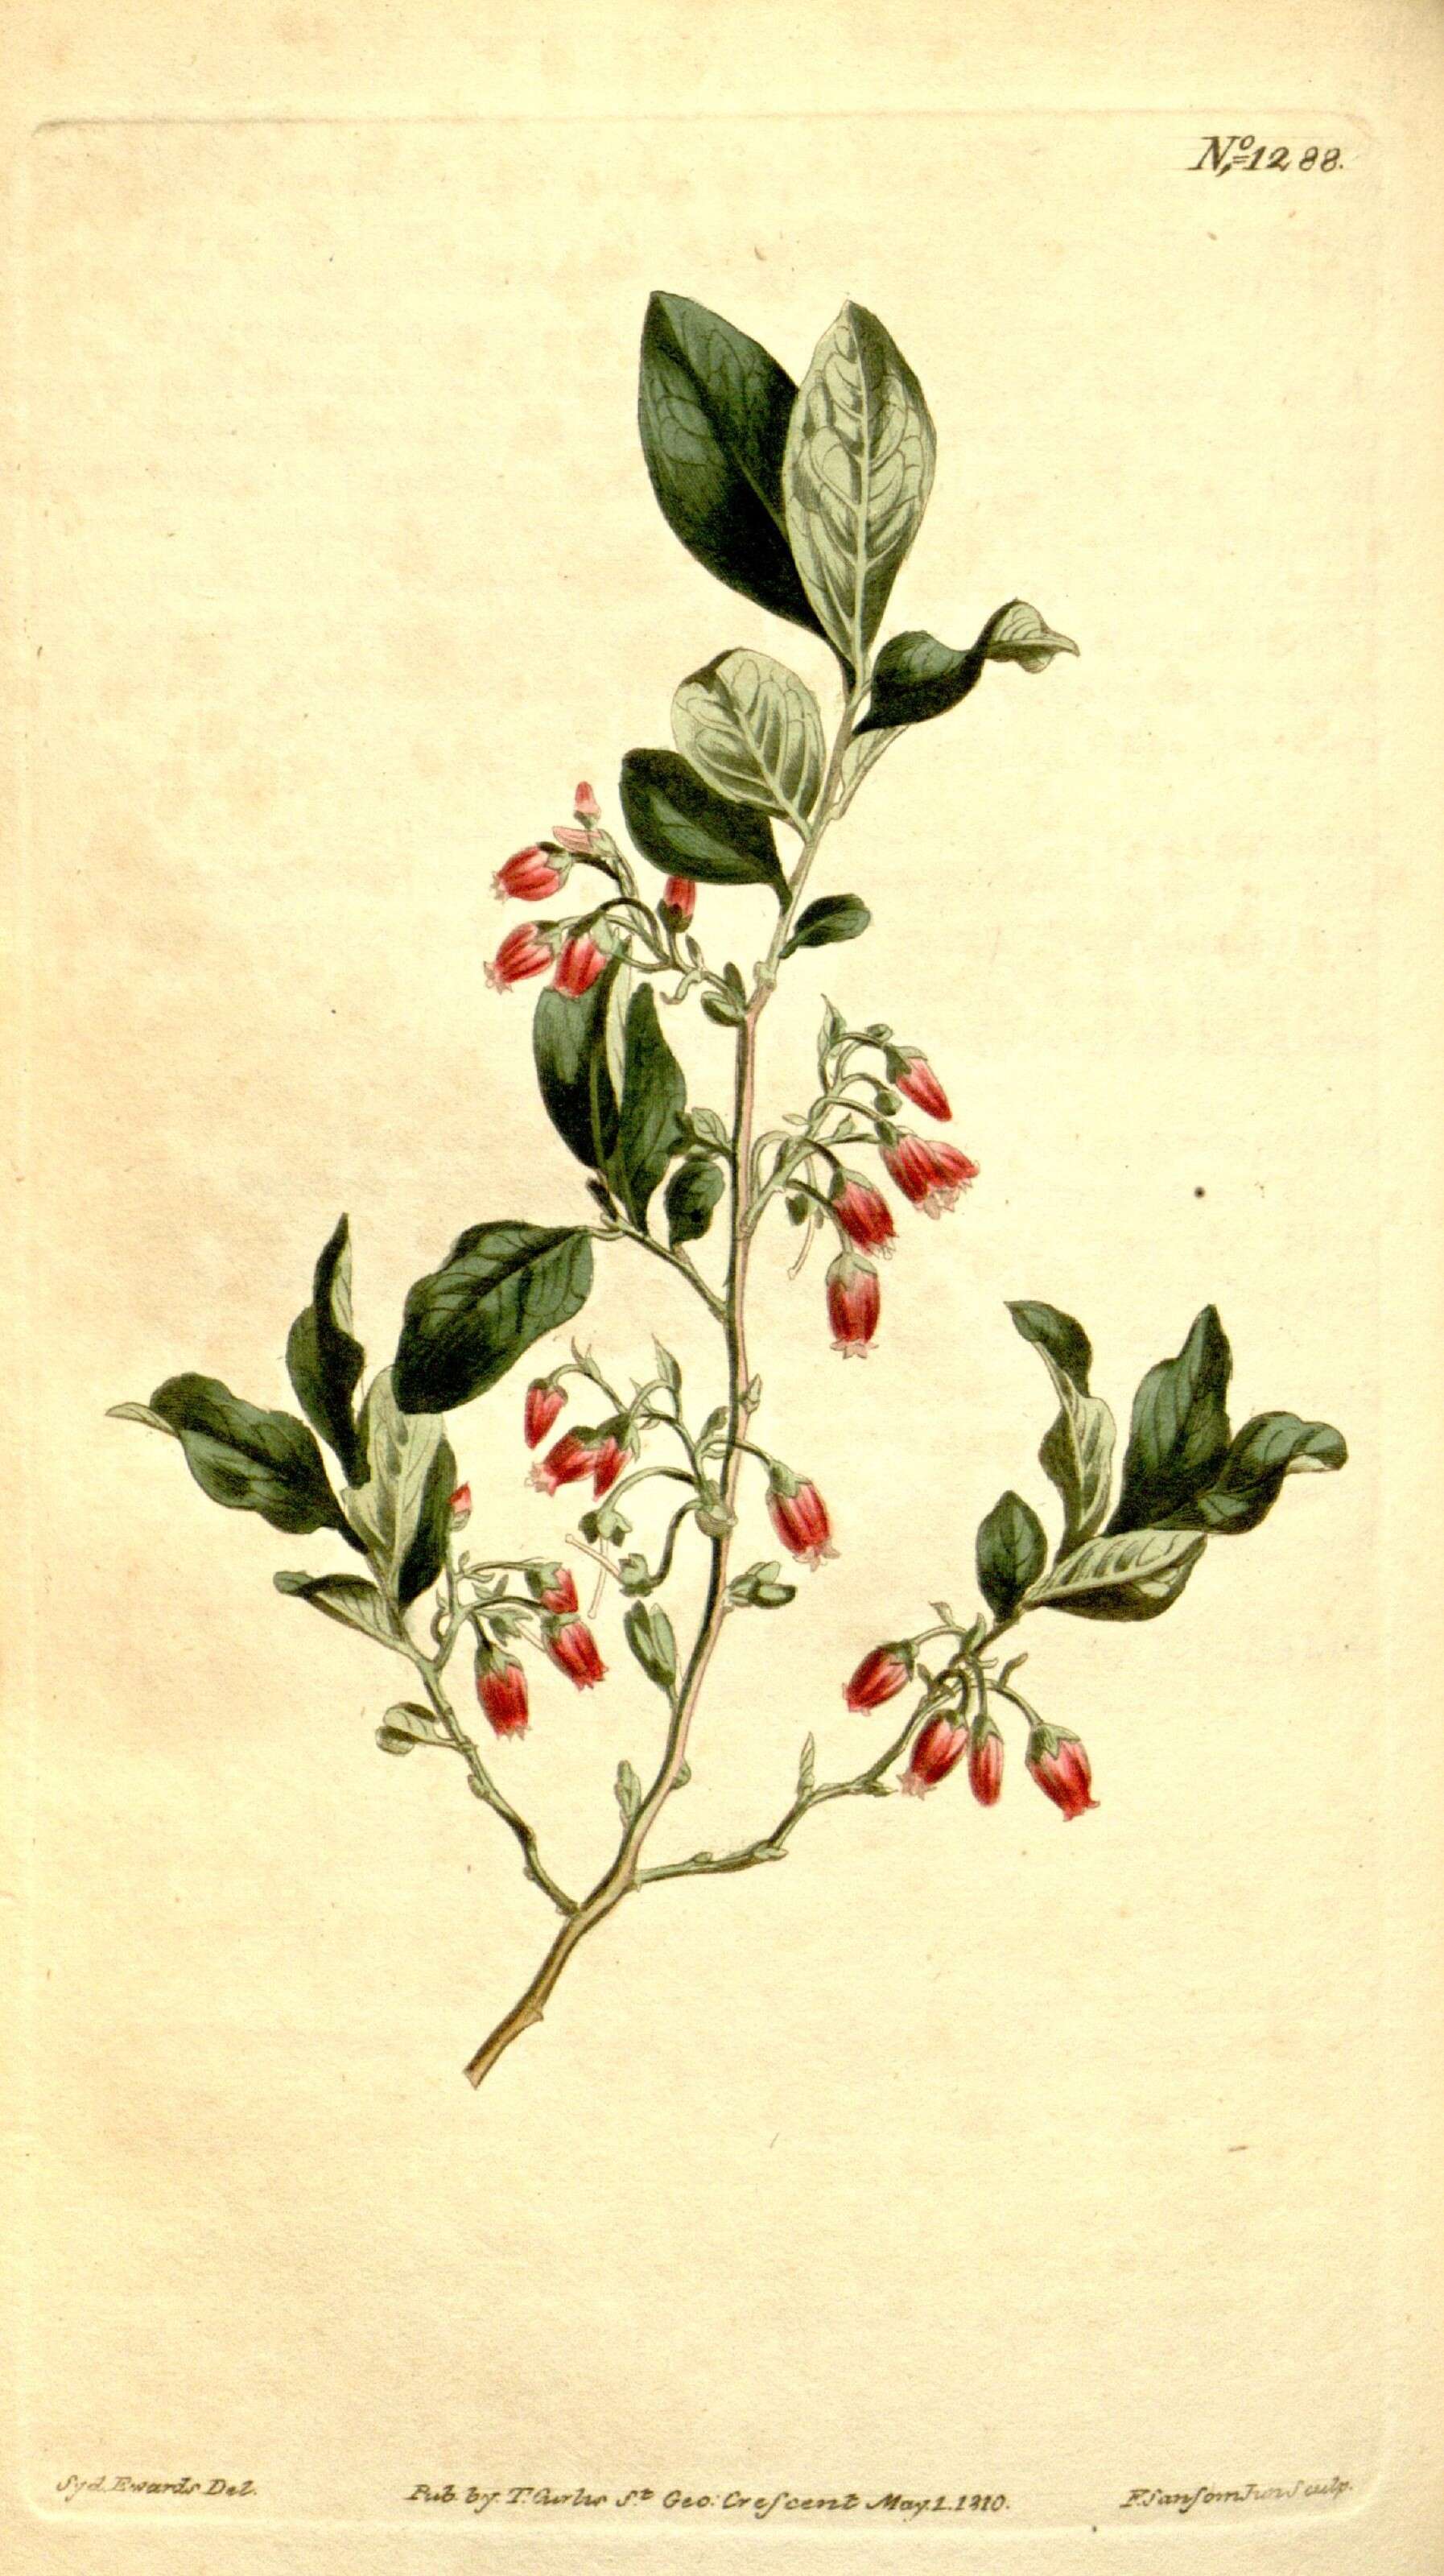 Image of huckleberry